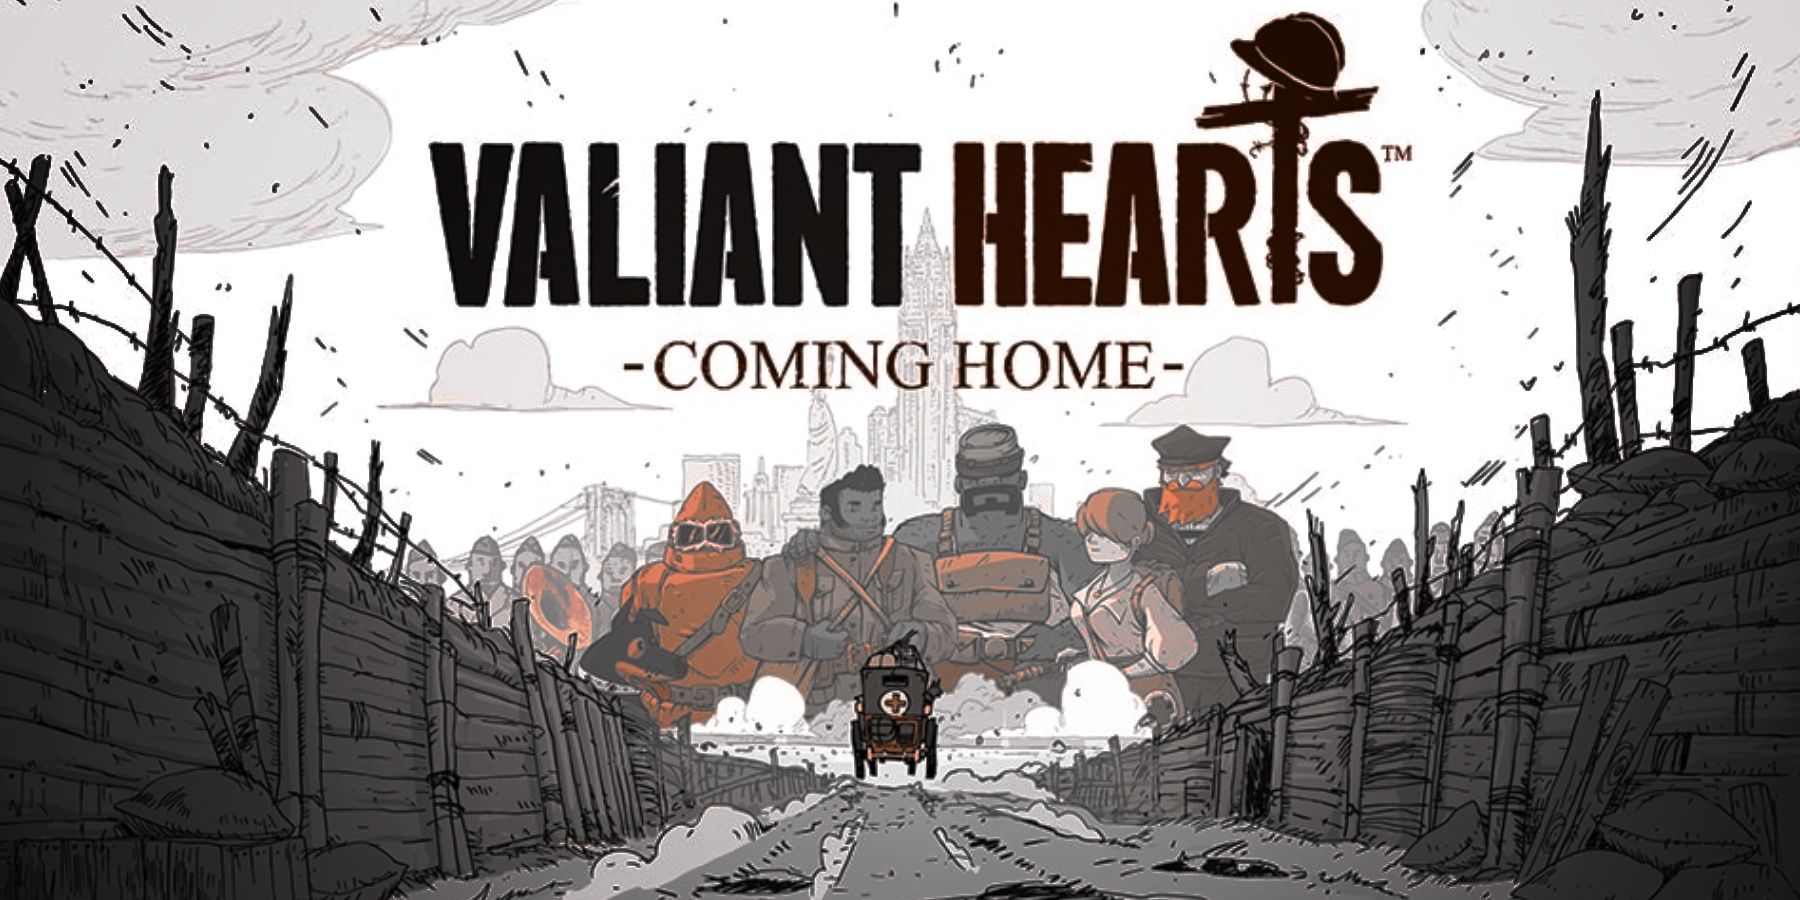 Valiant Hearts Coming Home Dramatic Artwork